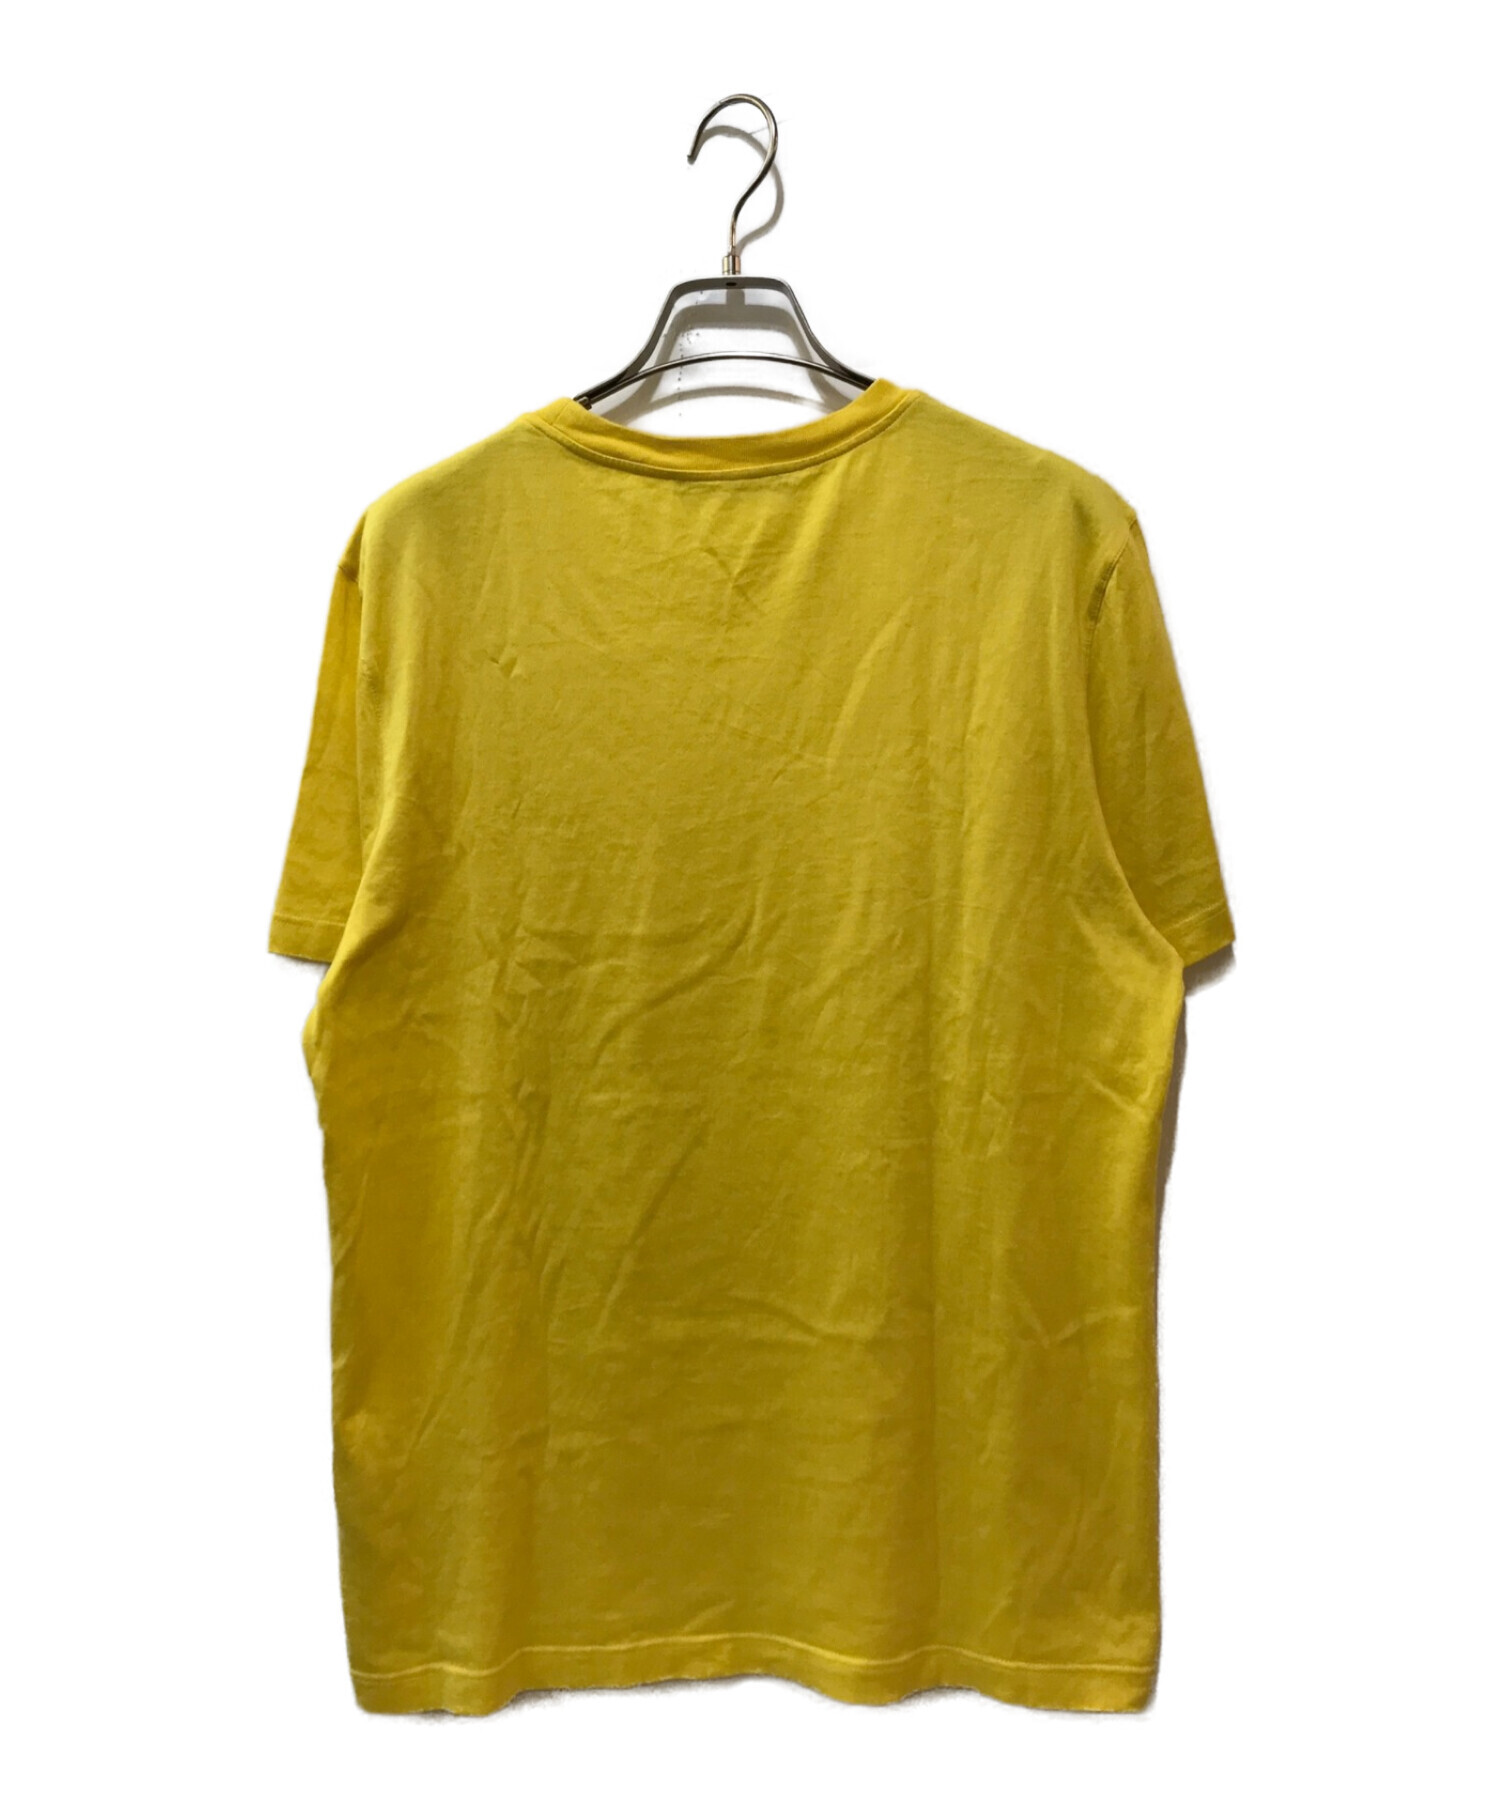 LOUIS VUITTON (ルイ ヴィトン) サークルロゴ刺繍Tシャツ イエロー サイズ:S